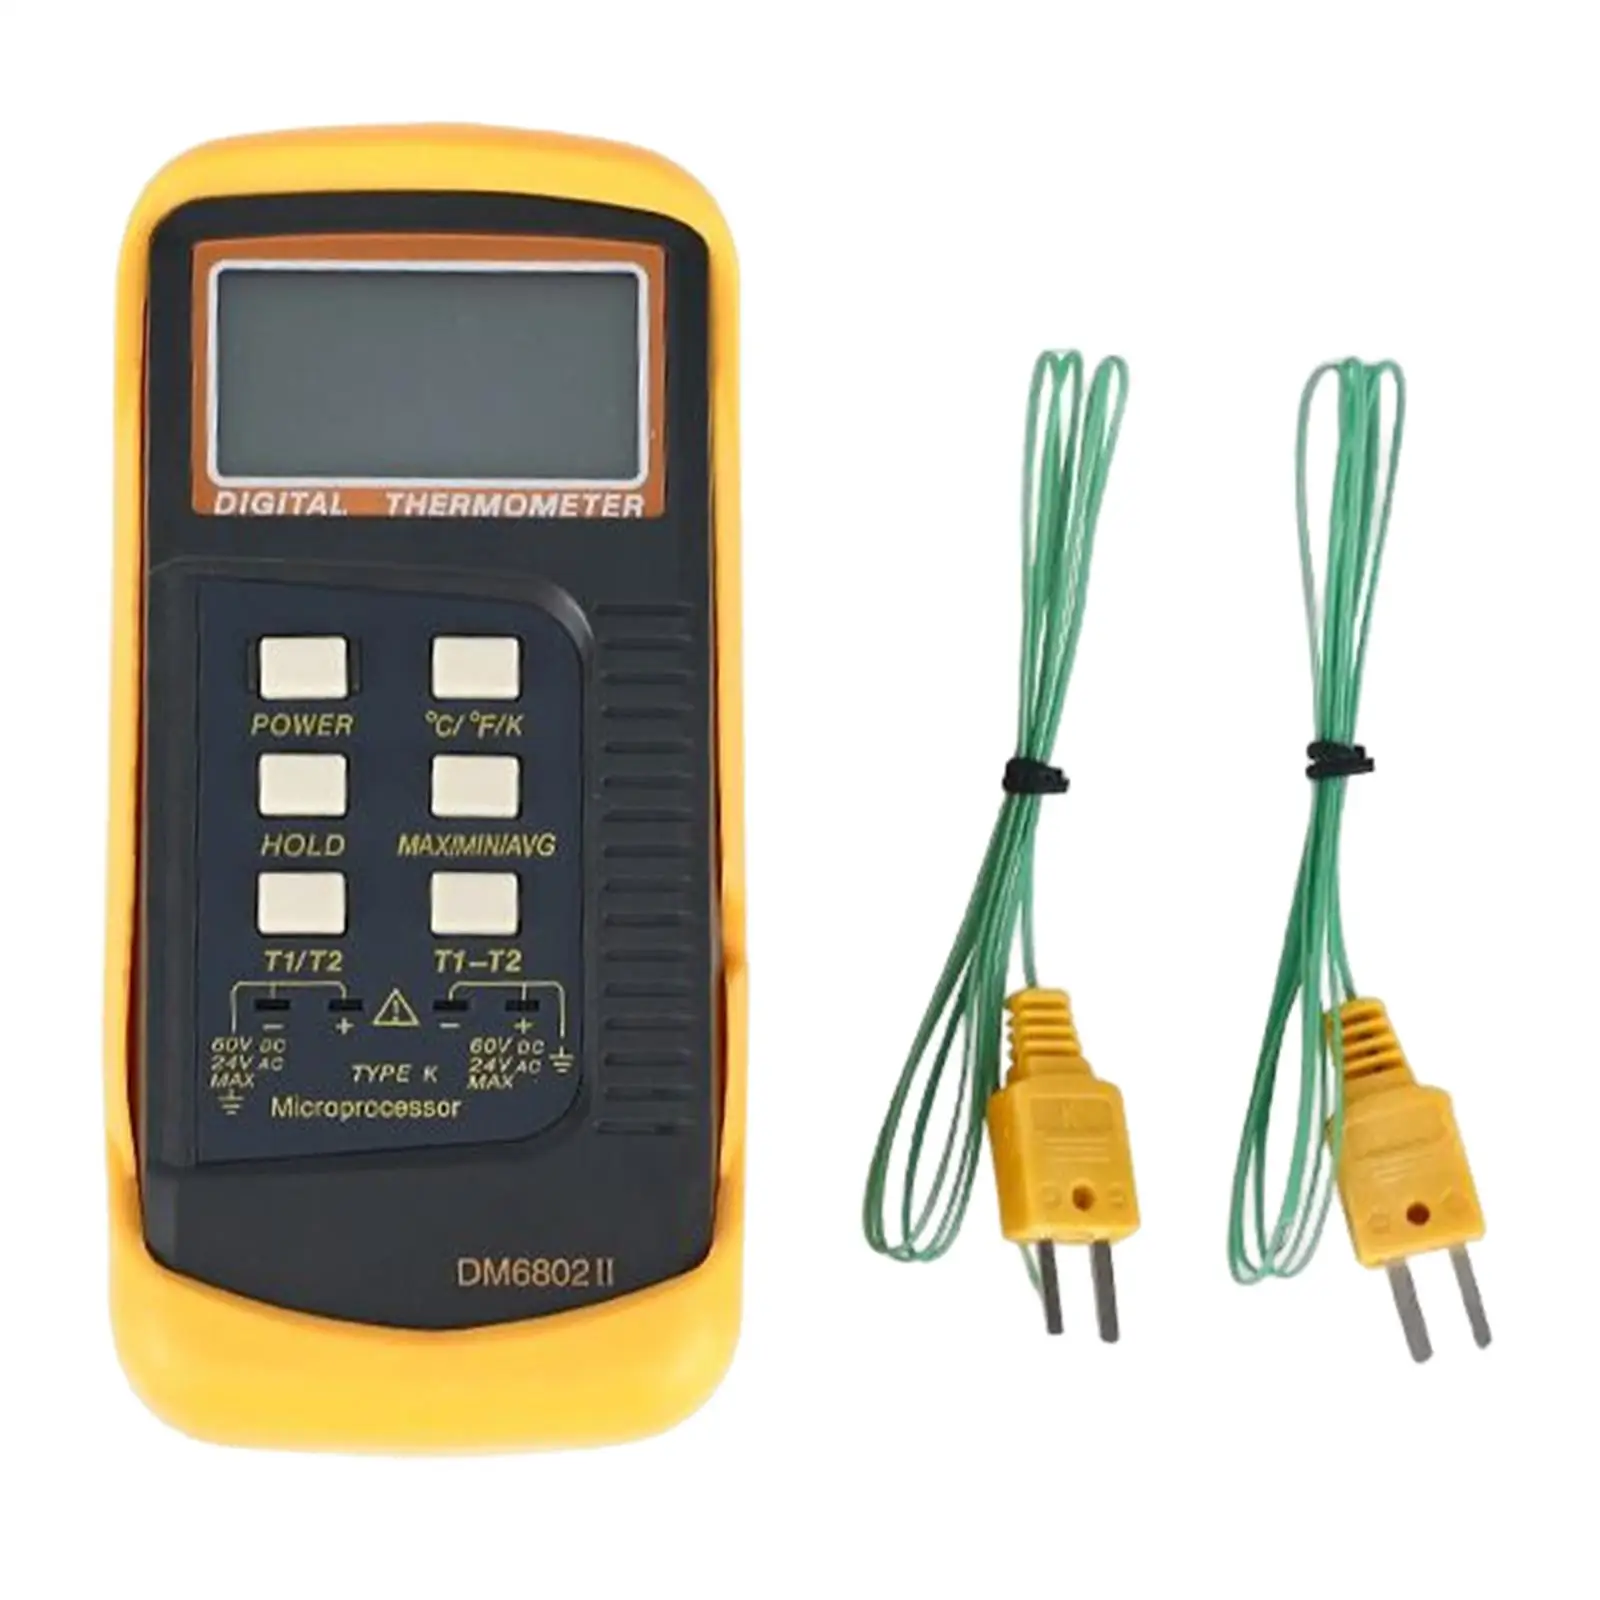 6802II Thermometer Temperature Meter Two Channels Handheld Digital Thermometer Sensor with Pipe Clamp Desktop Measurement Meter